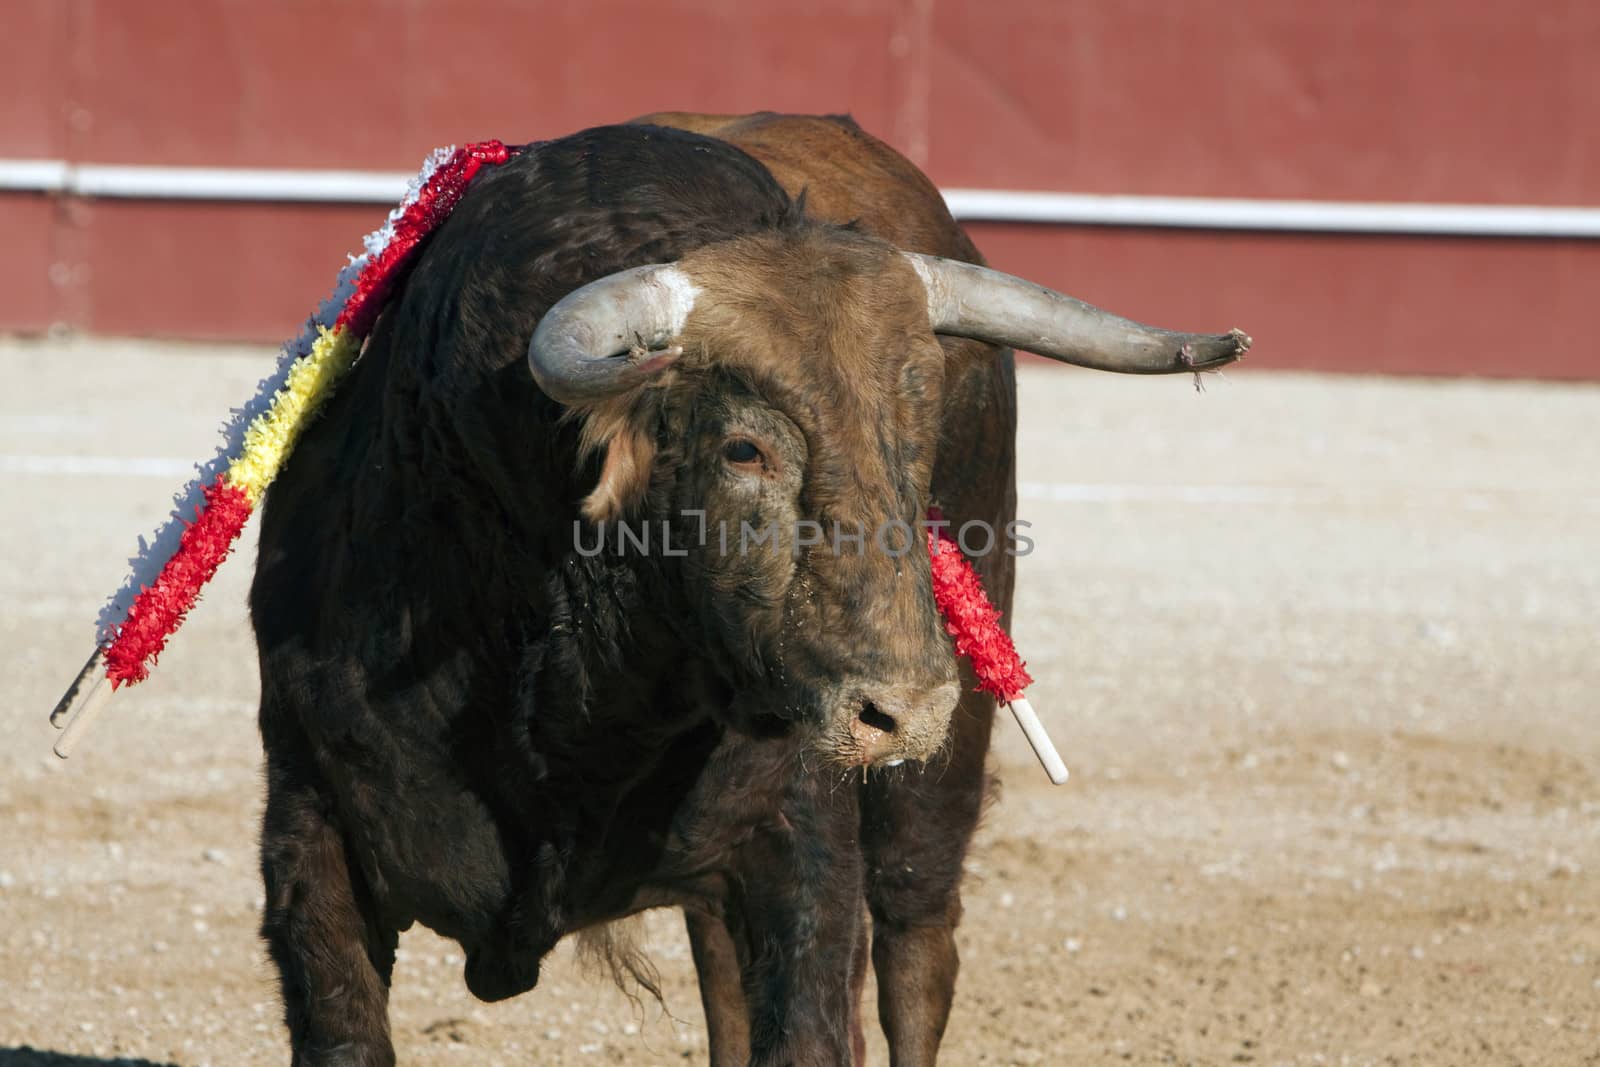 Bull of reddish brown hair, Spain by digicomphoto